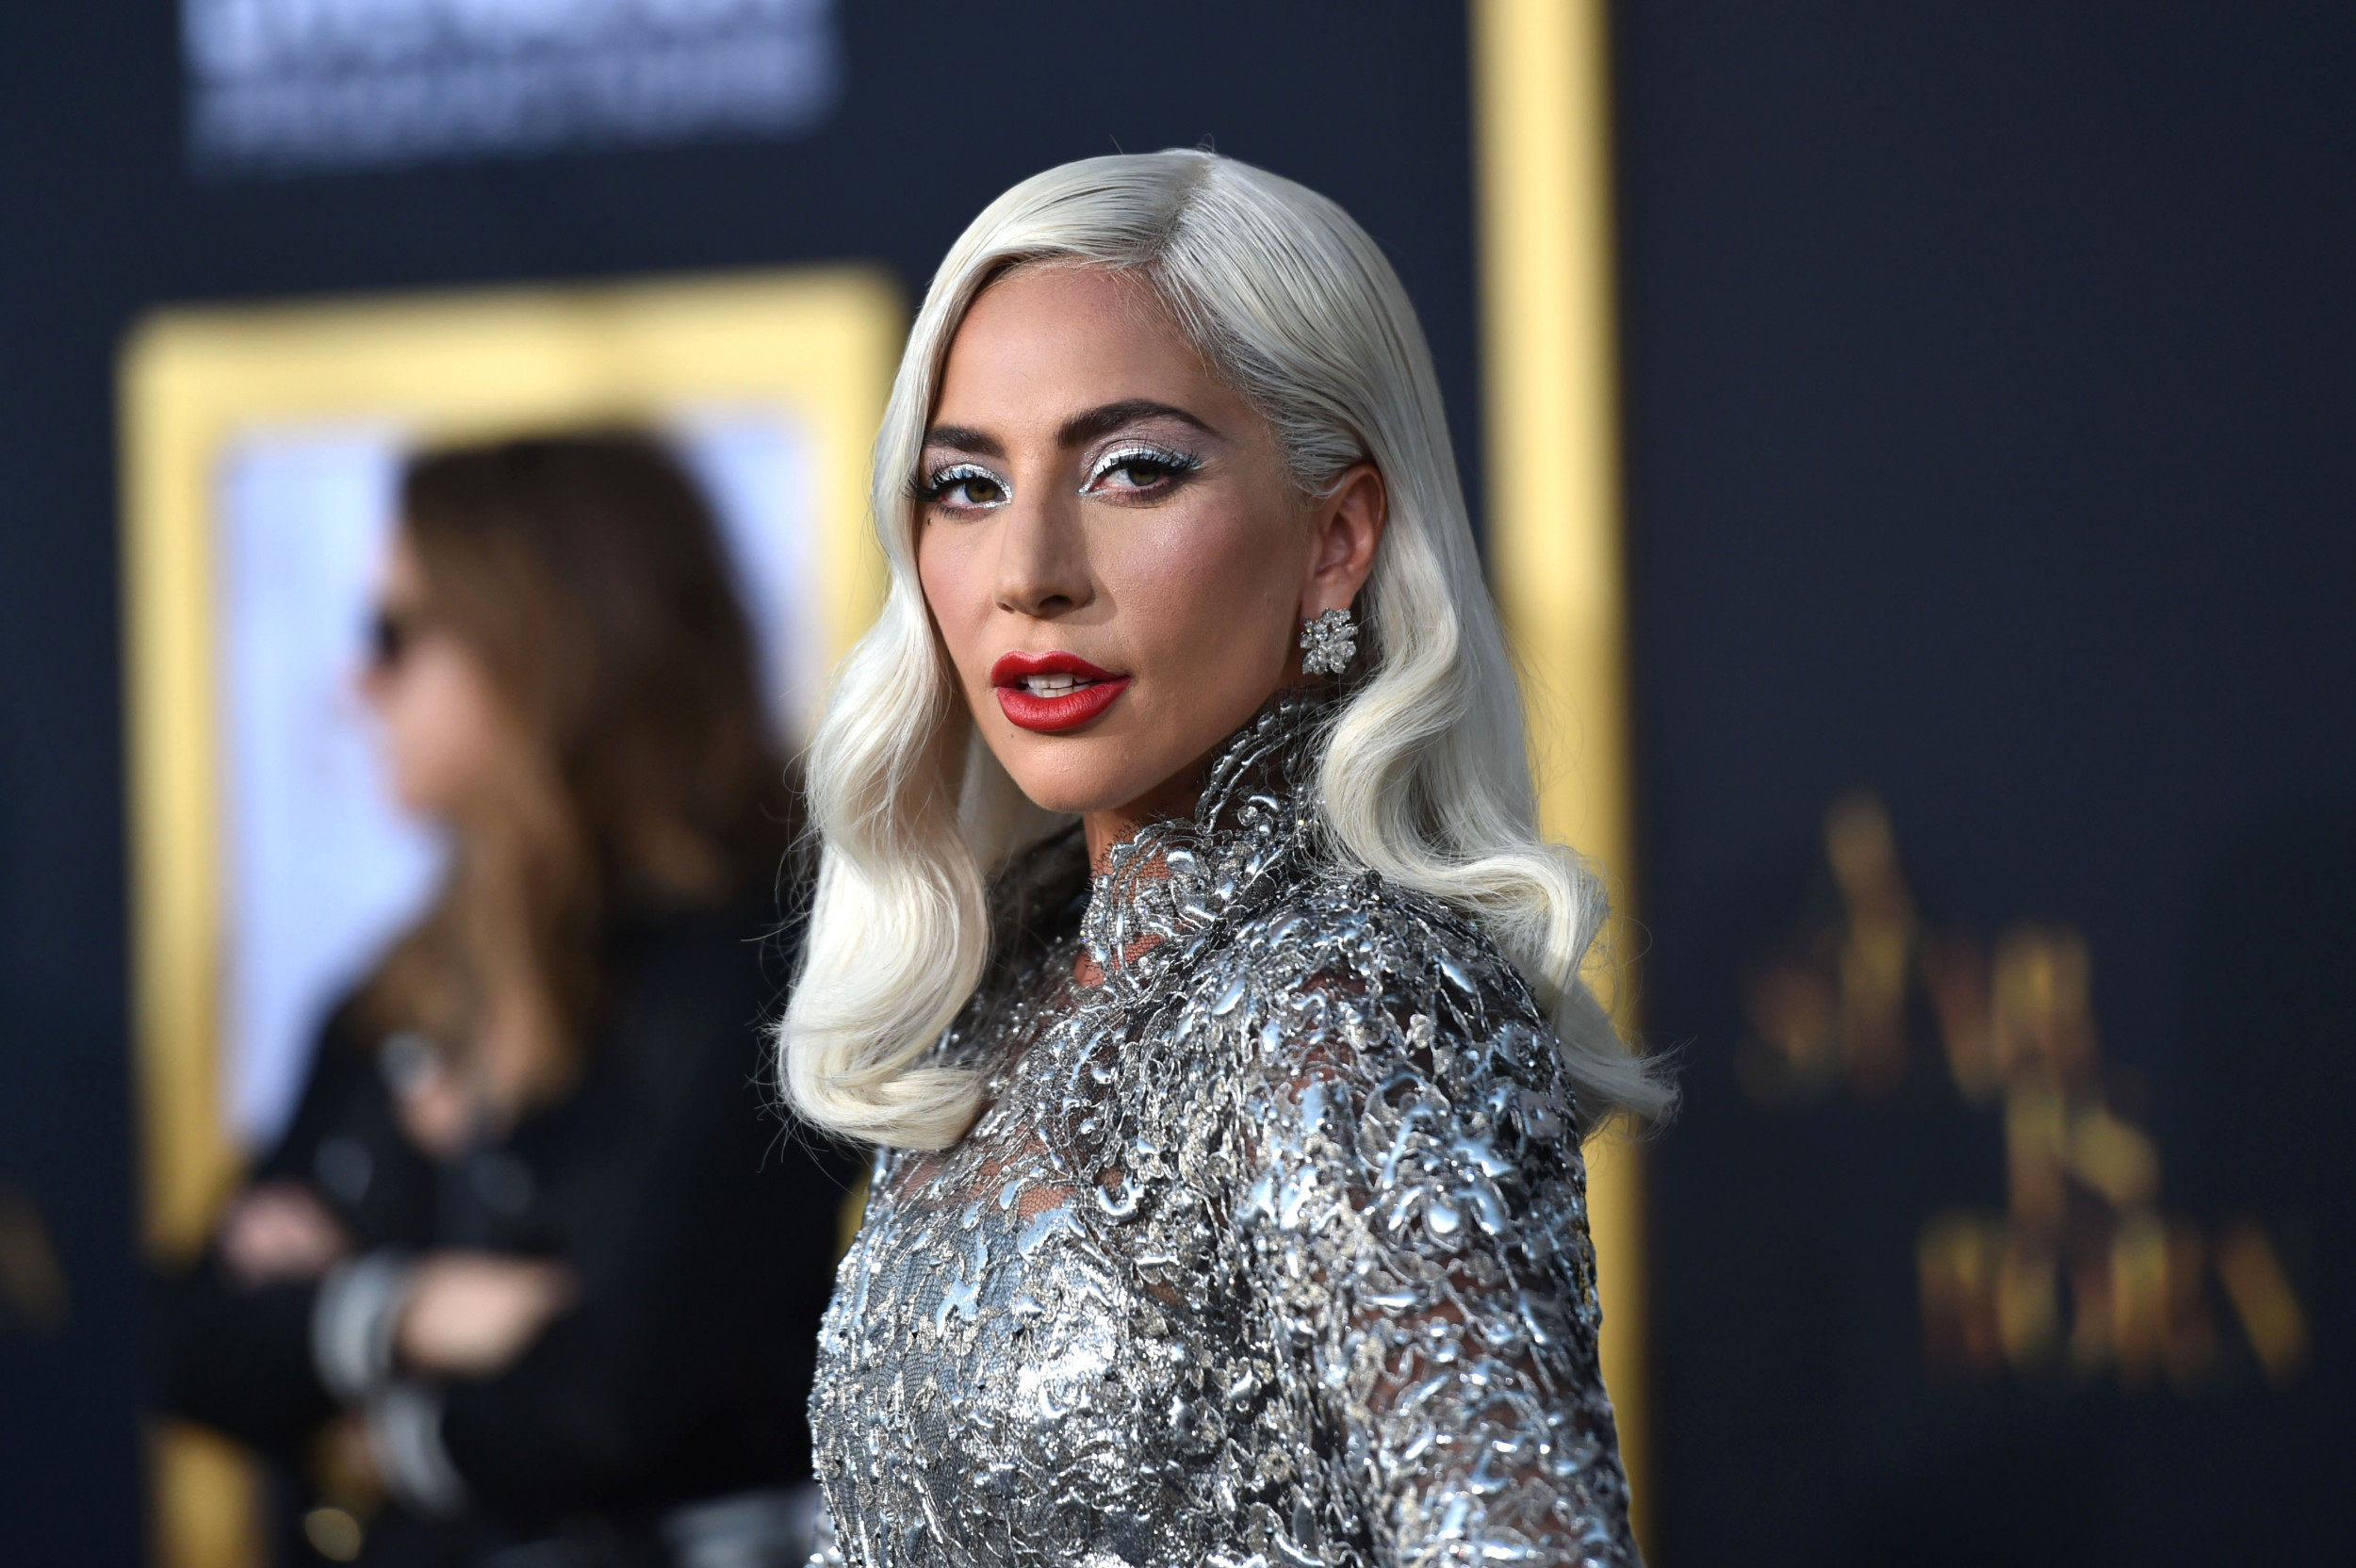 Lady Gaga – Poker face: Oι προσβλητικοί στίχοι του τραγουδιού